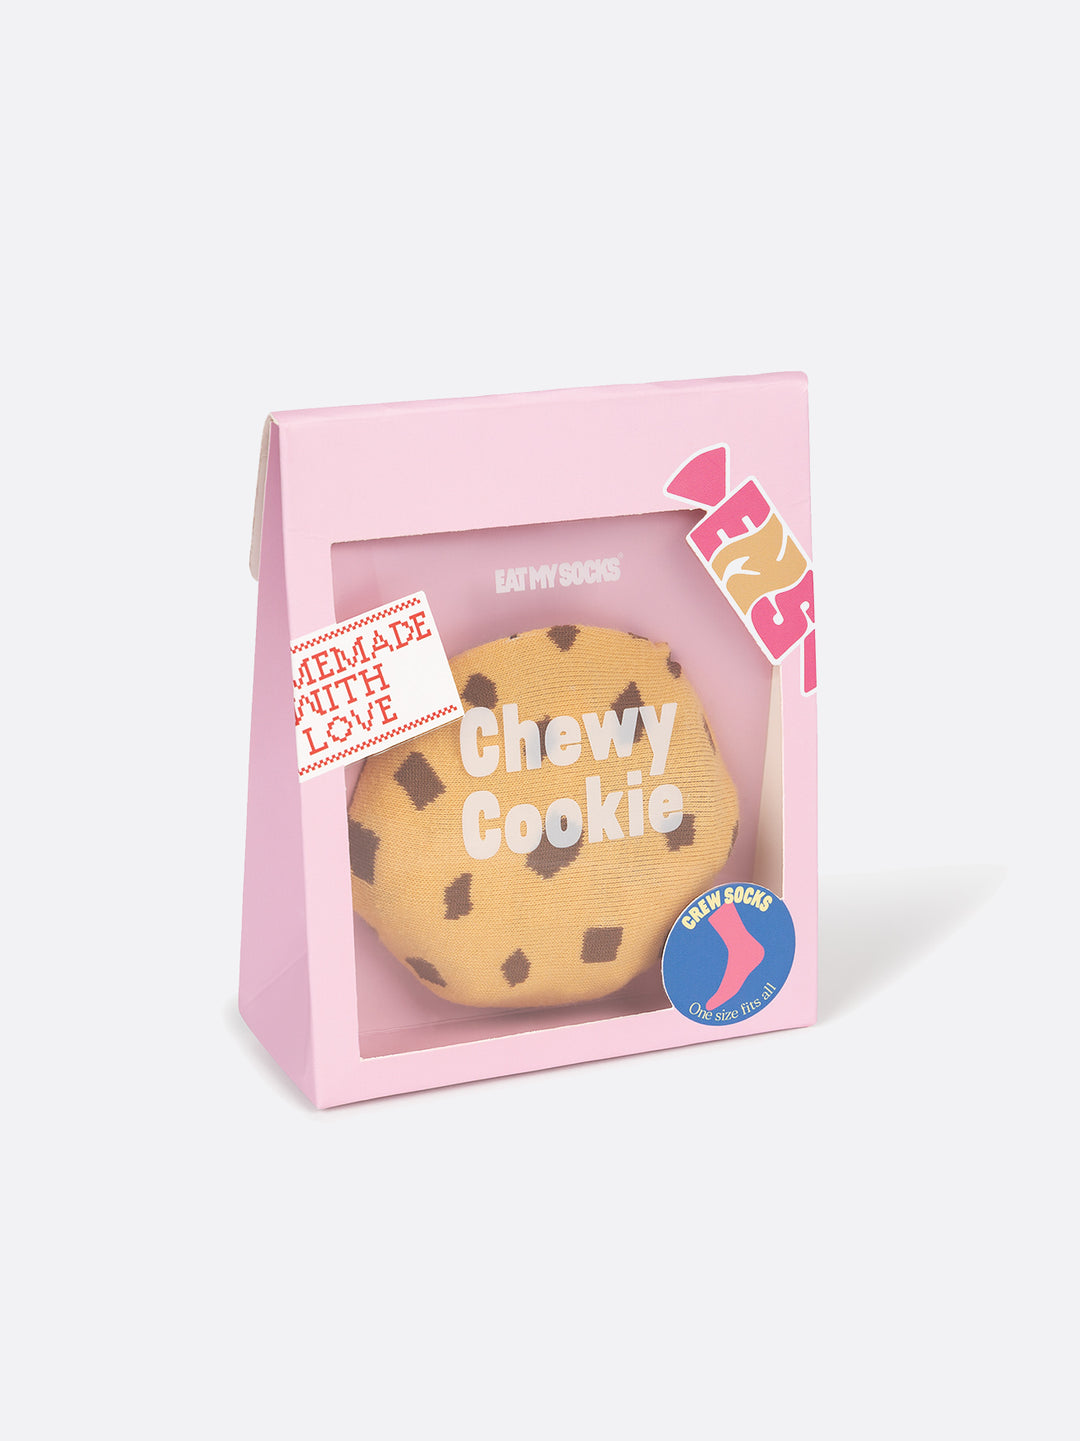 Socks - "Chewy Cookie"